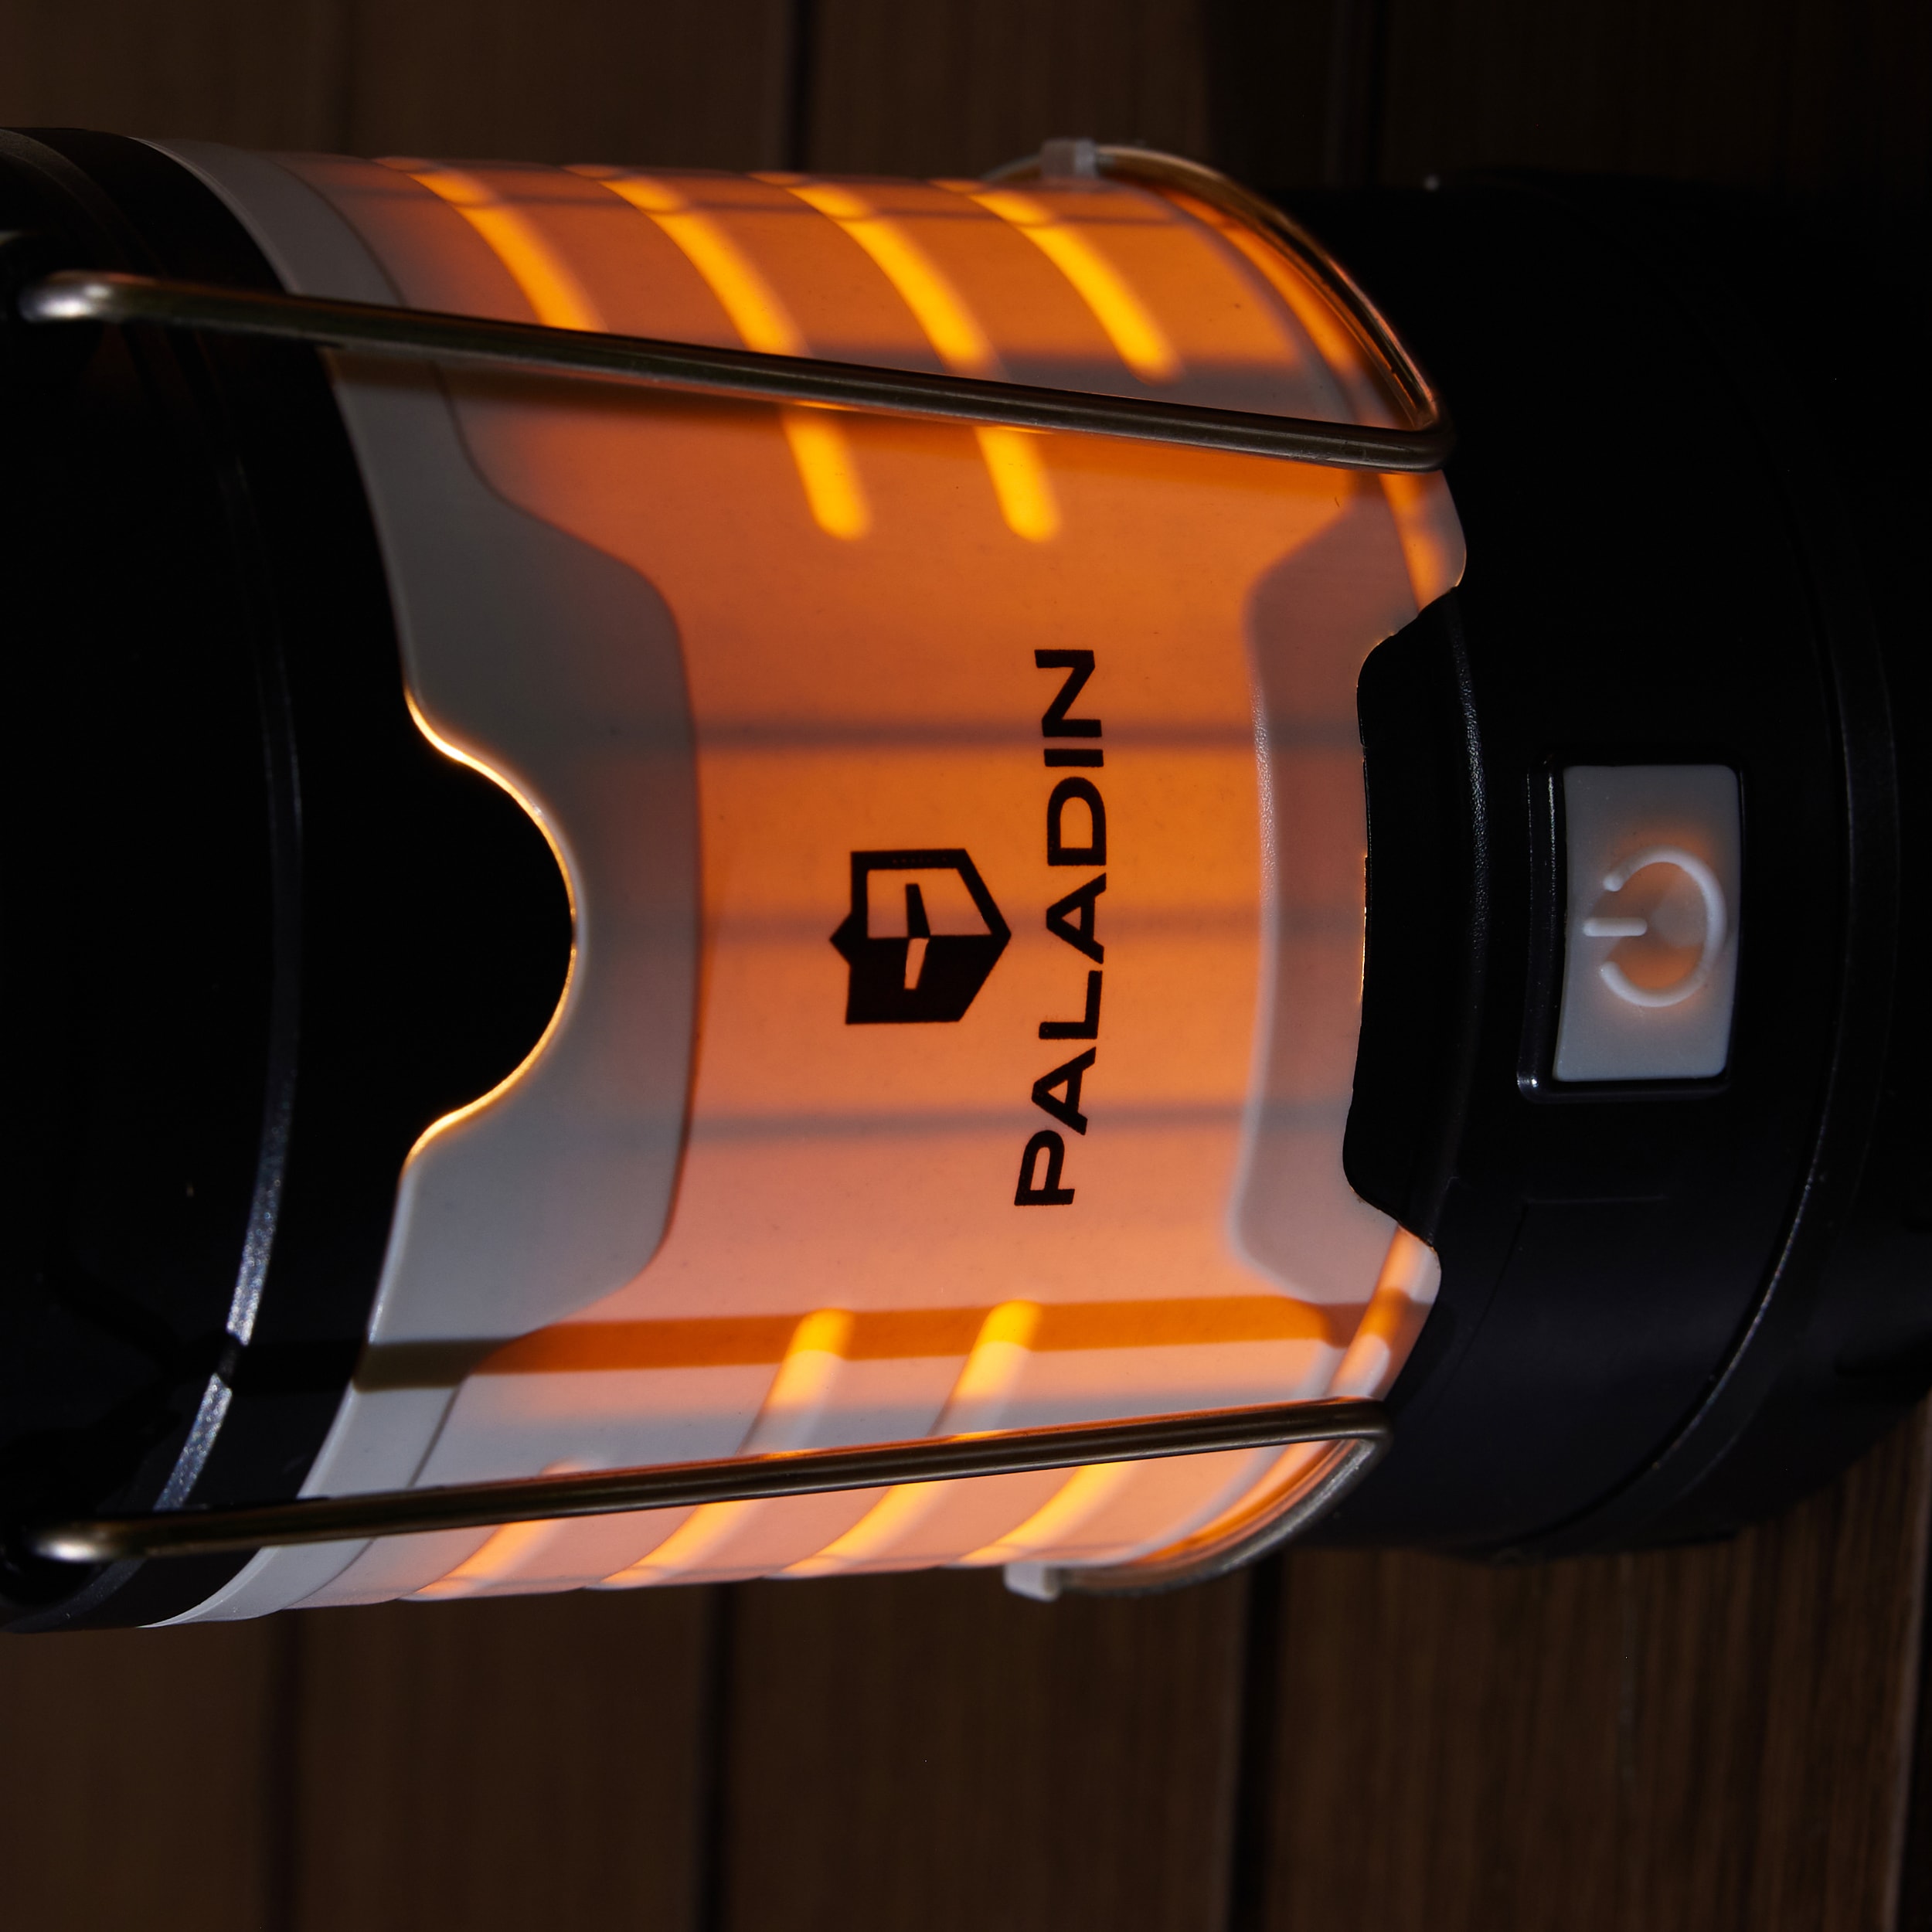 Etekcity Portable LED Camping Lantern — Get Ready! Emergency Planning Center